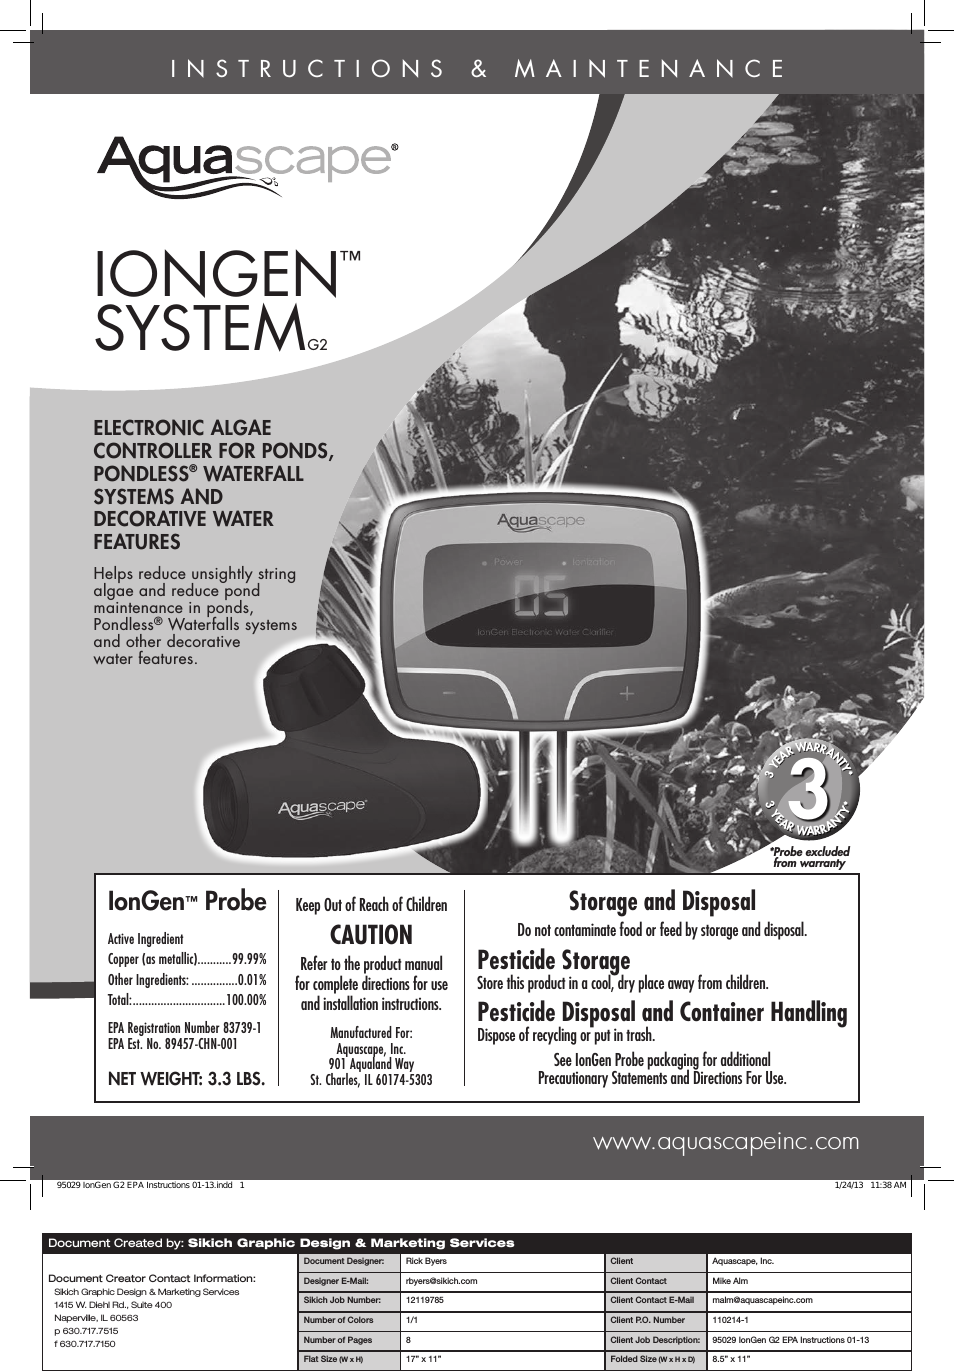 IonGen Generation G2 (95027)